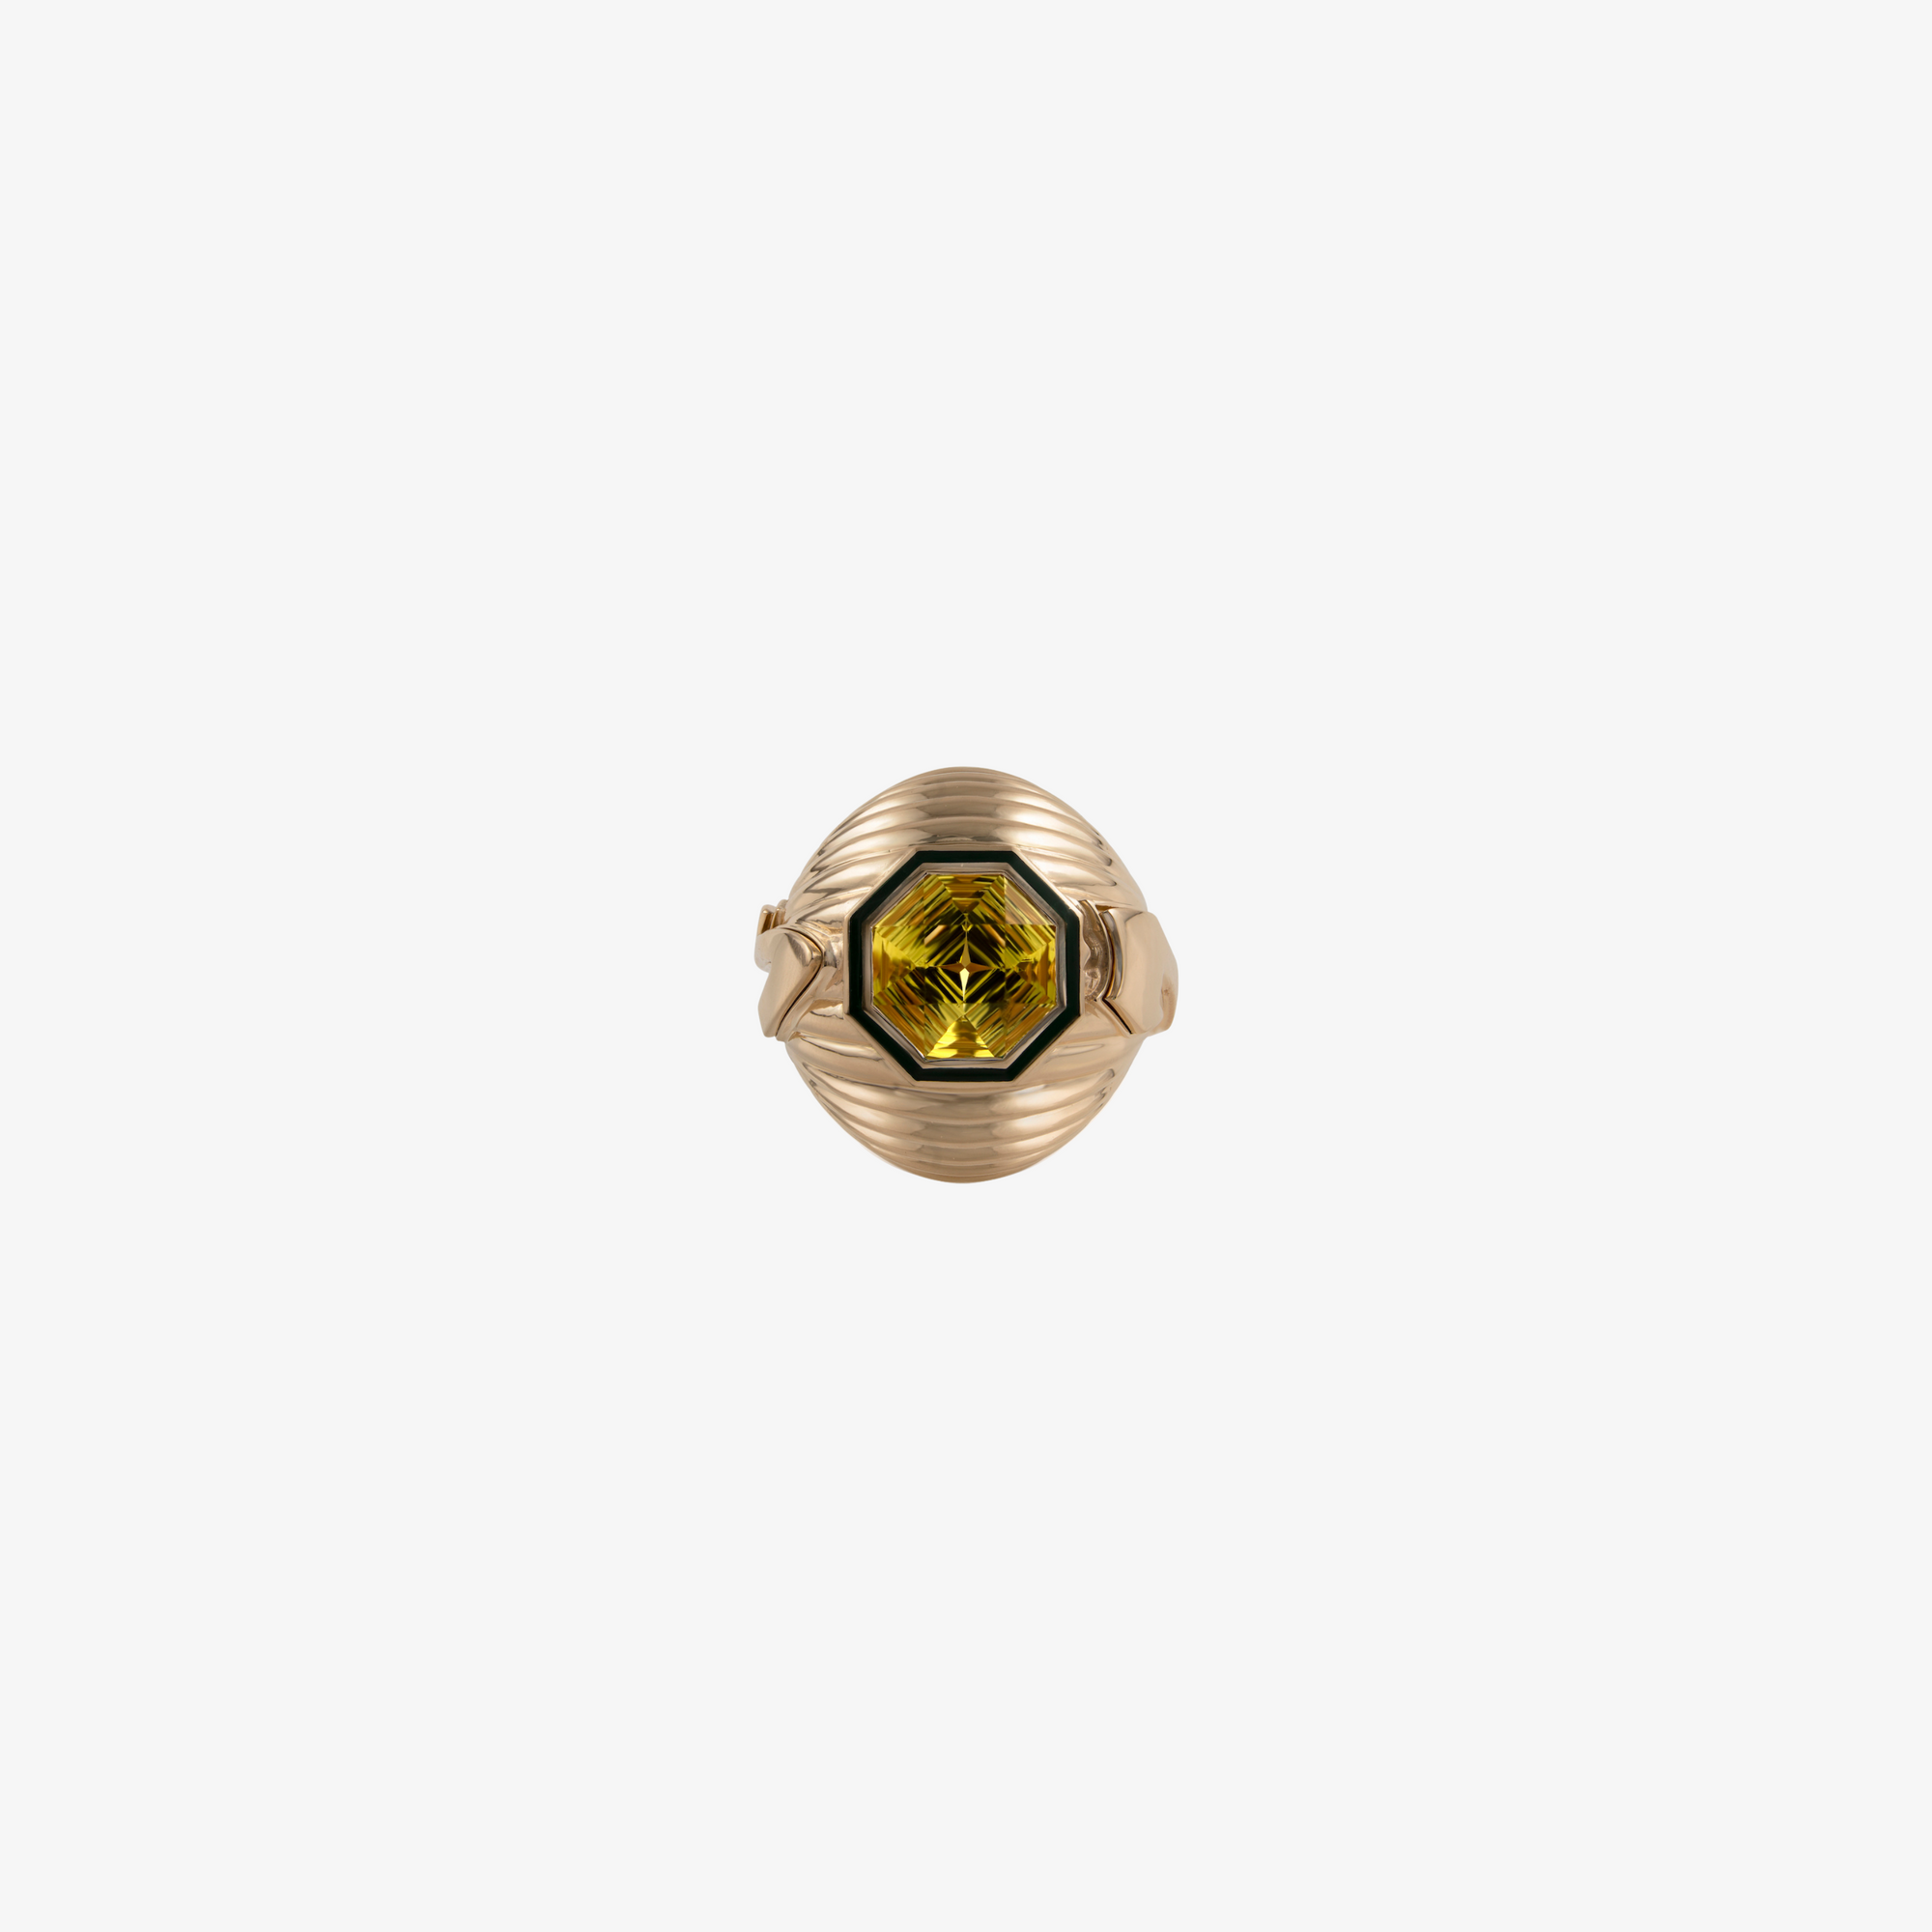 TAIM - 18K Gold, Enamel & Peridot Stone "Love" Ring